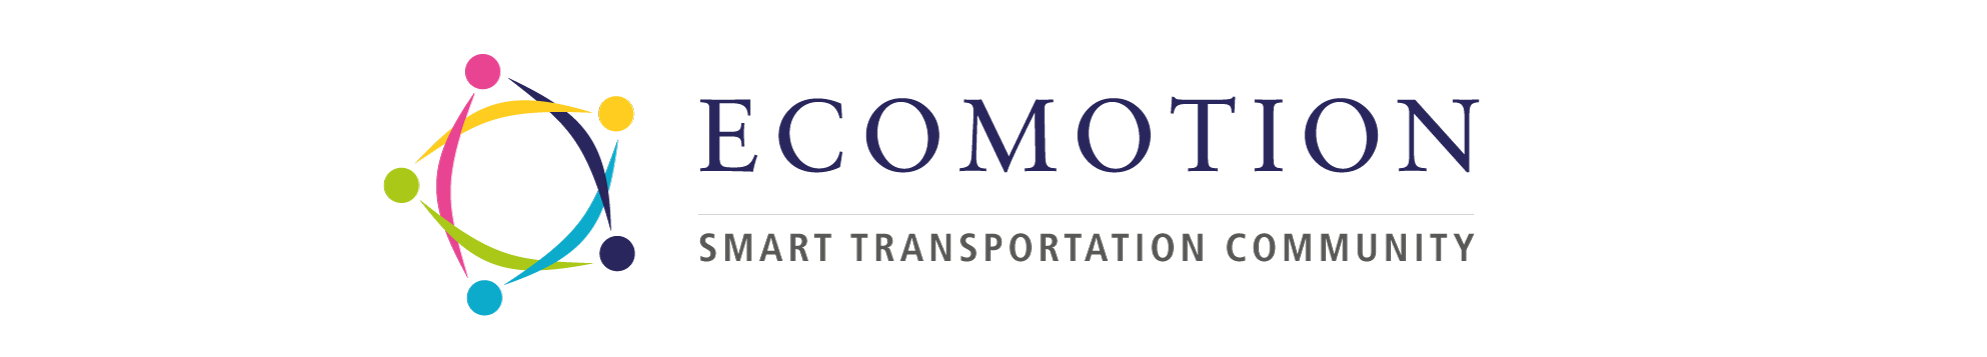 ecomotion logo